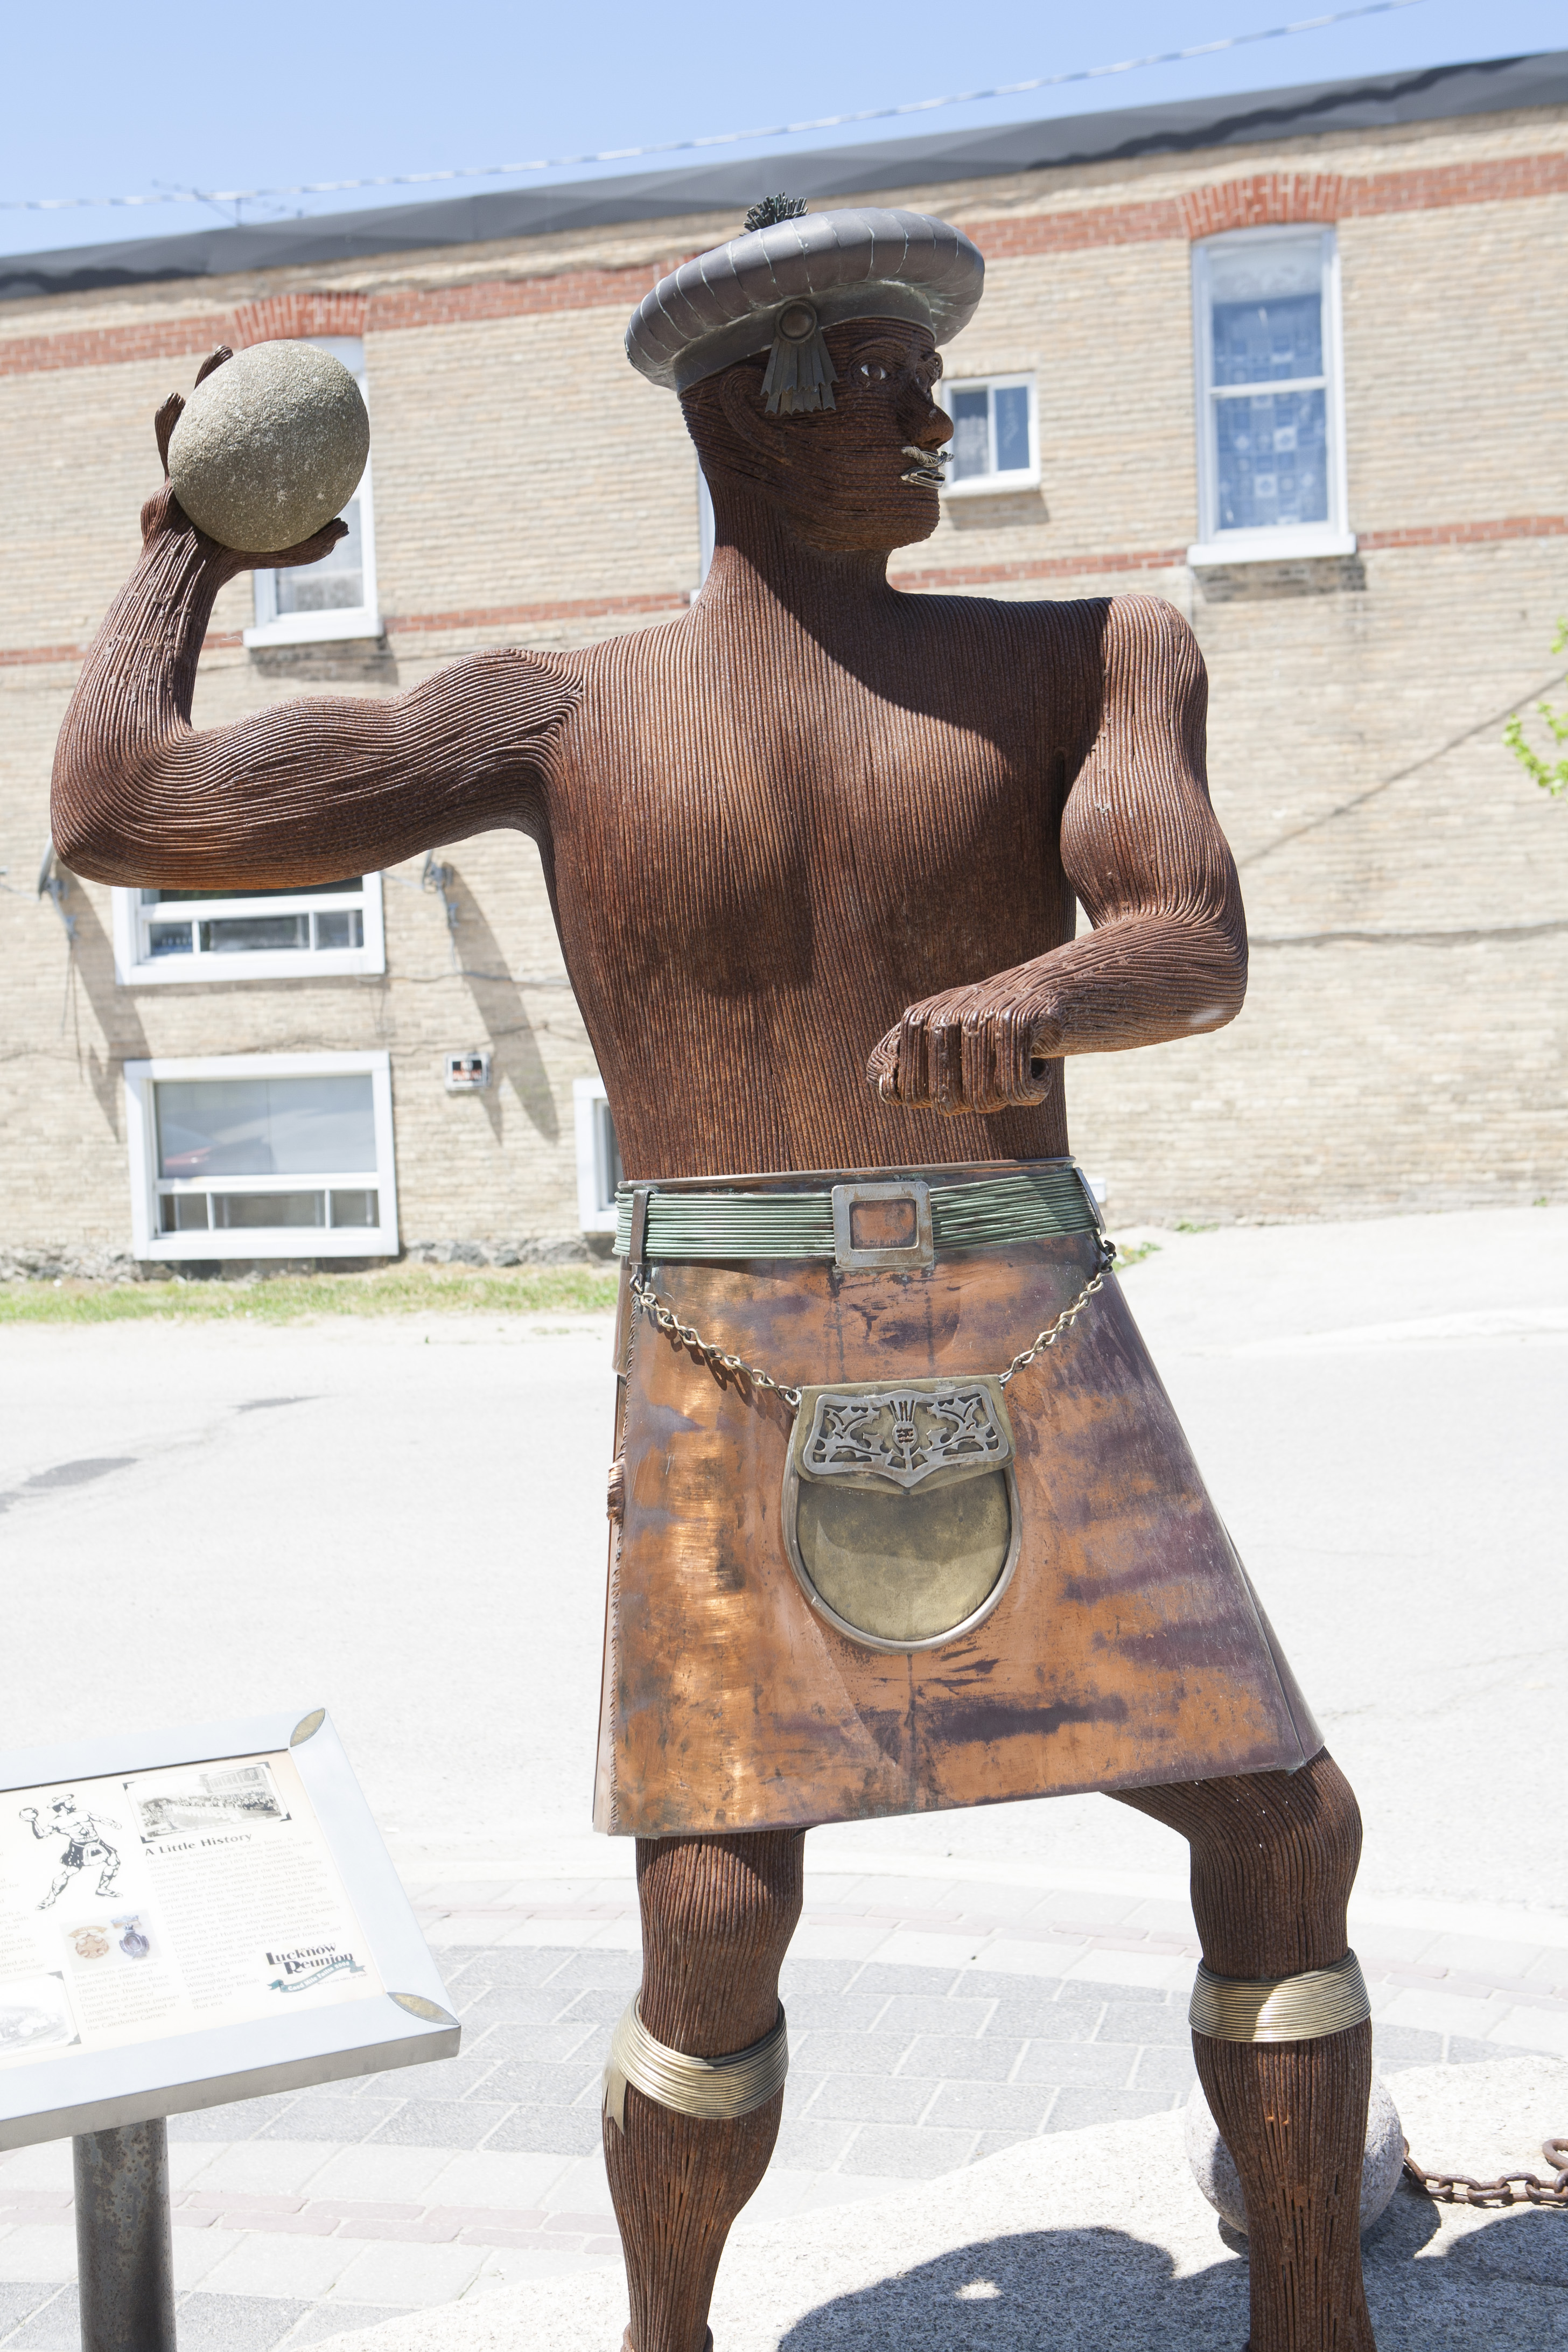 Statue of a strongman, wearing a kilt, throwing a shot put.